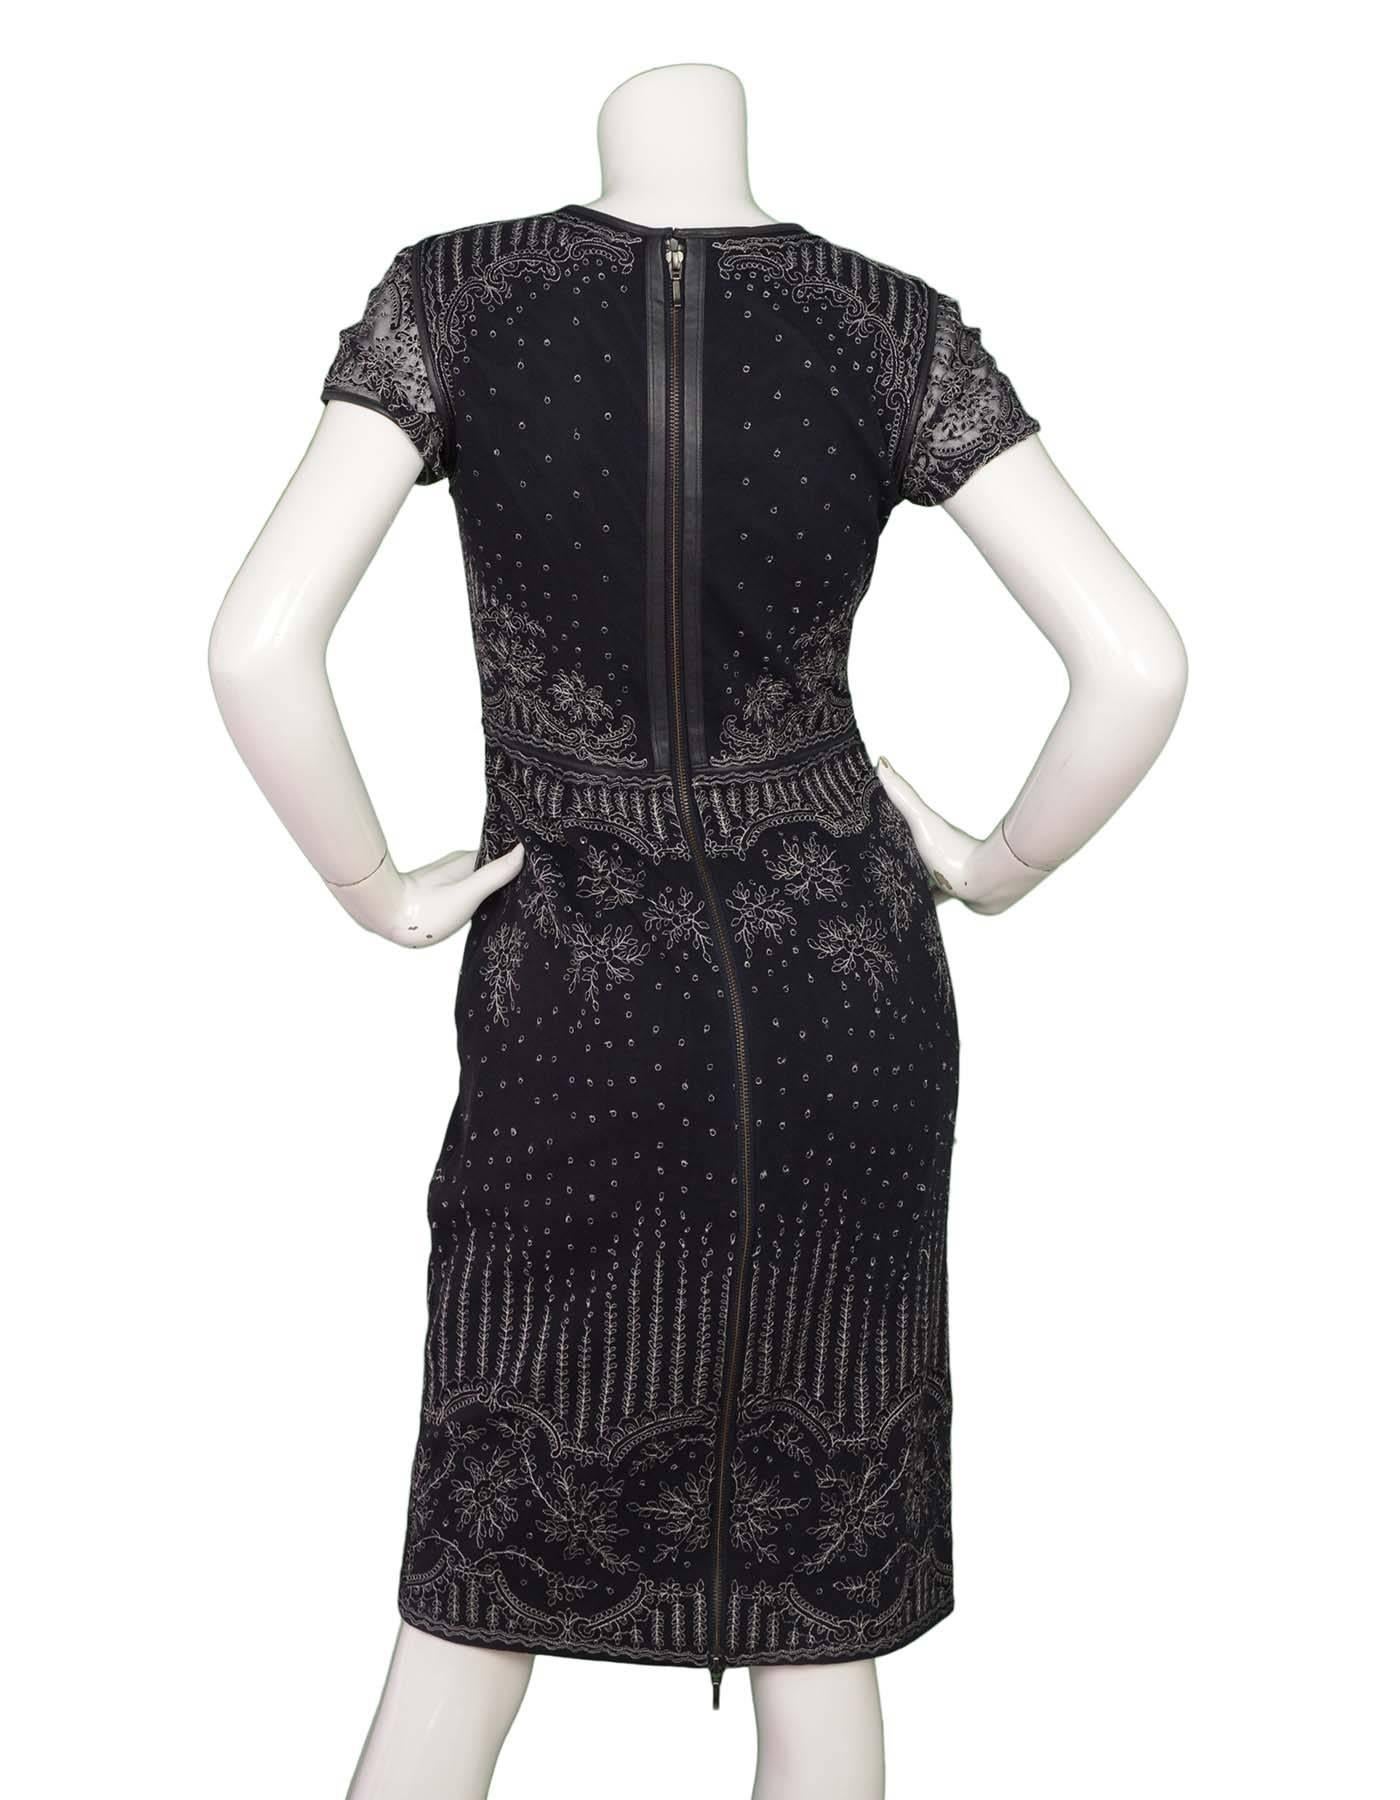 Black Catherine Deane Navy Lace Dress sz 6